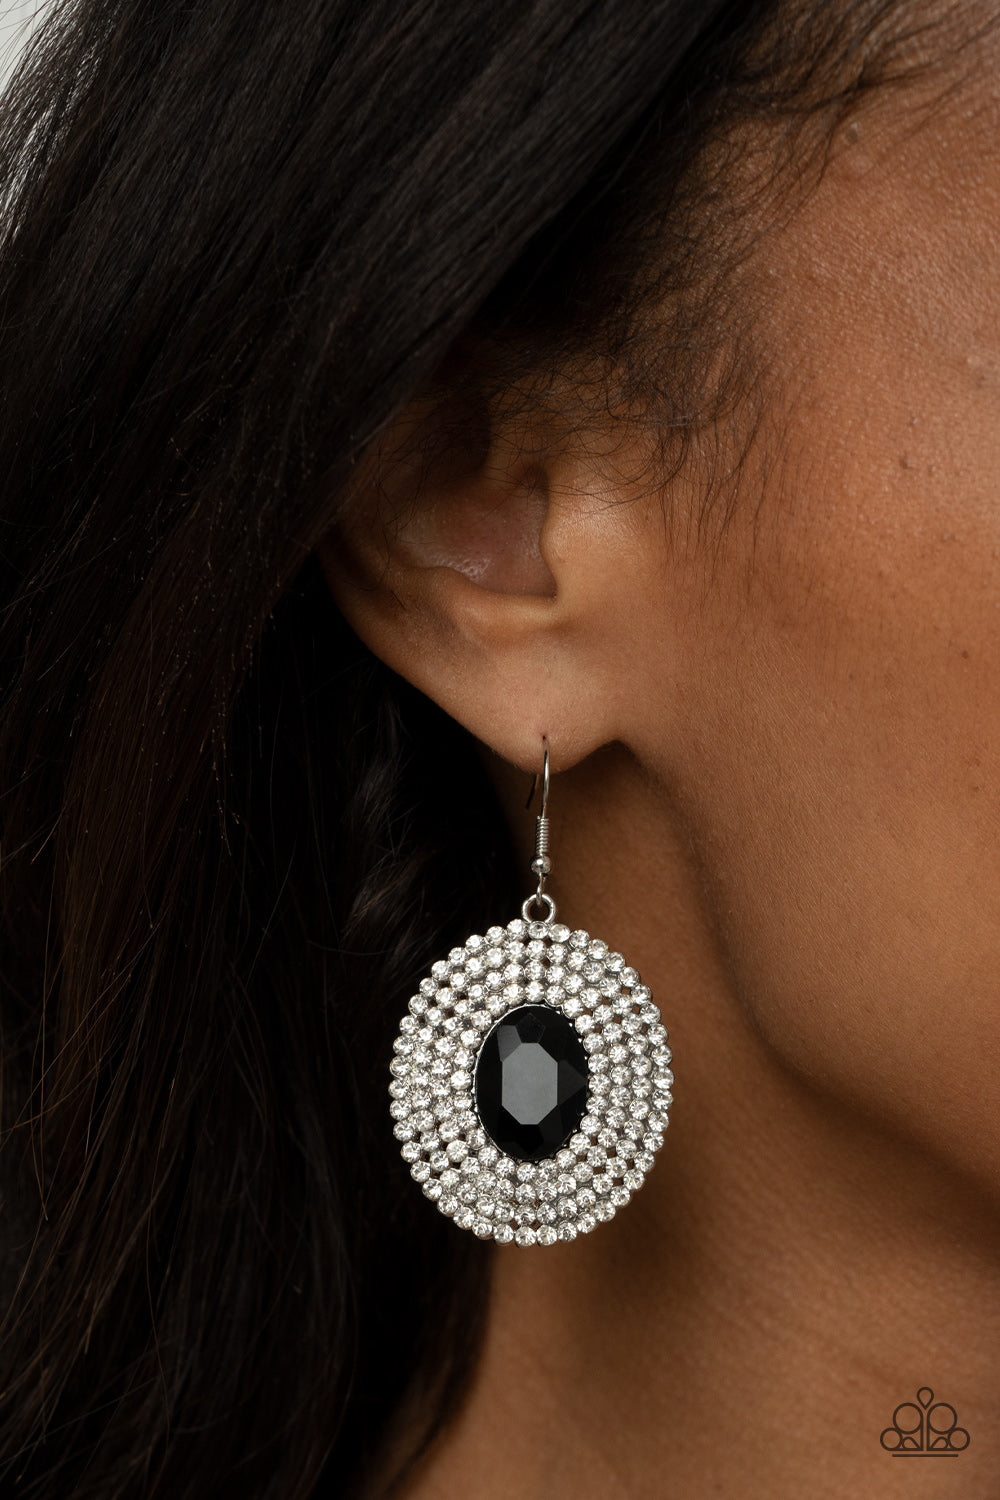 earrings – Tokyo Fashion